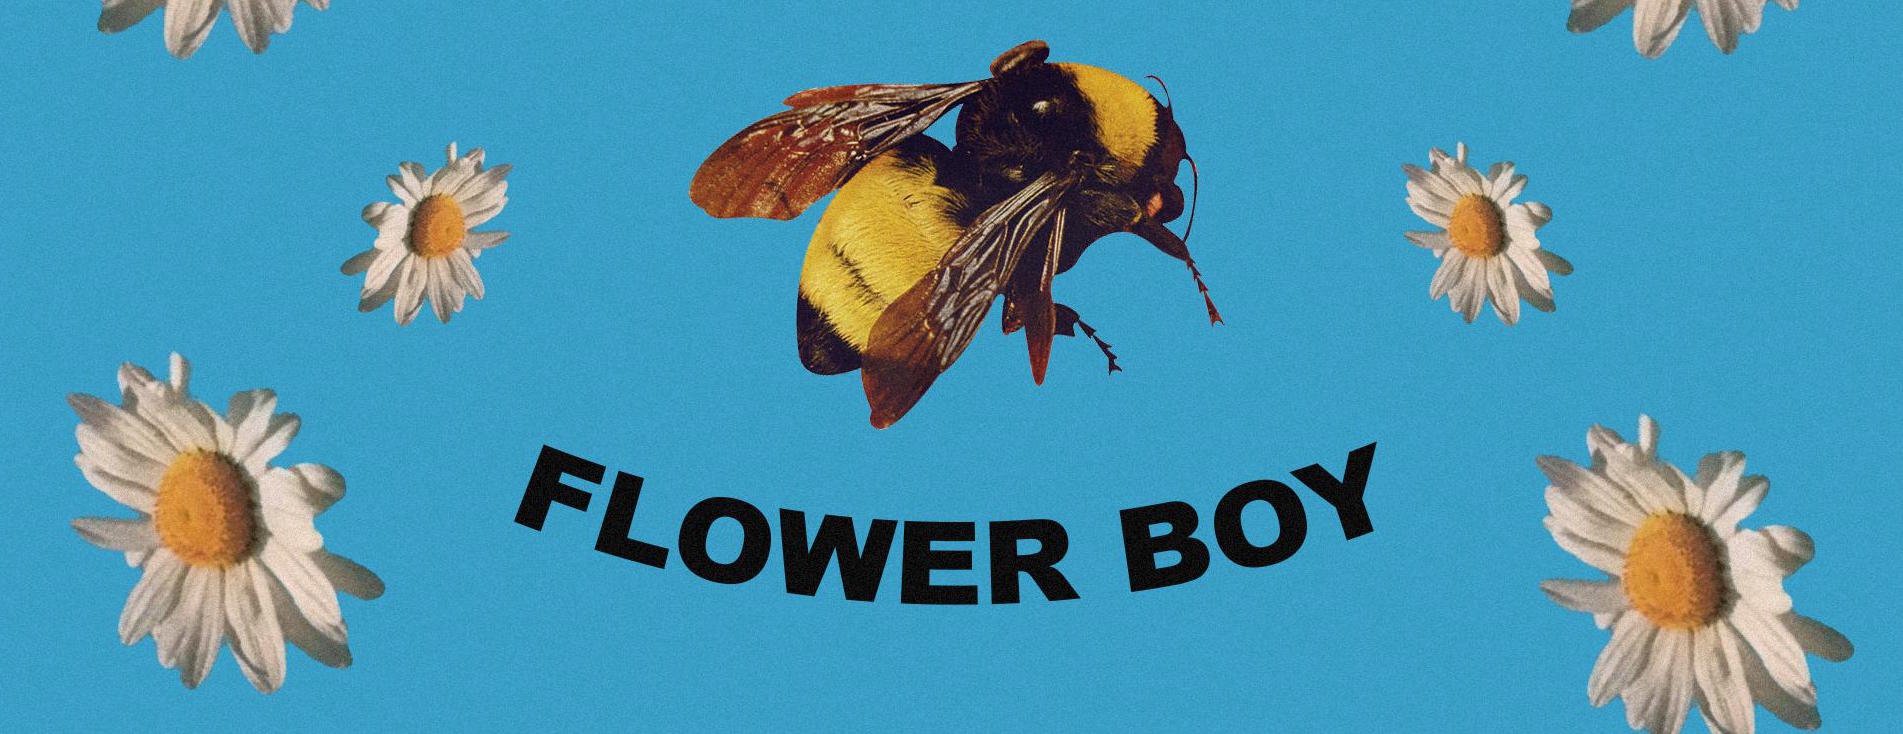 tyler the creator flower boy foreword lyrics